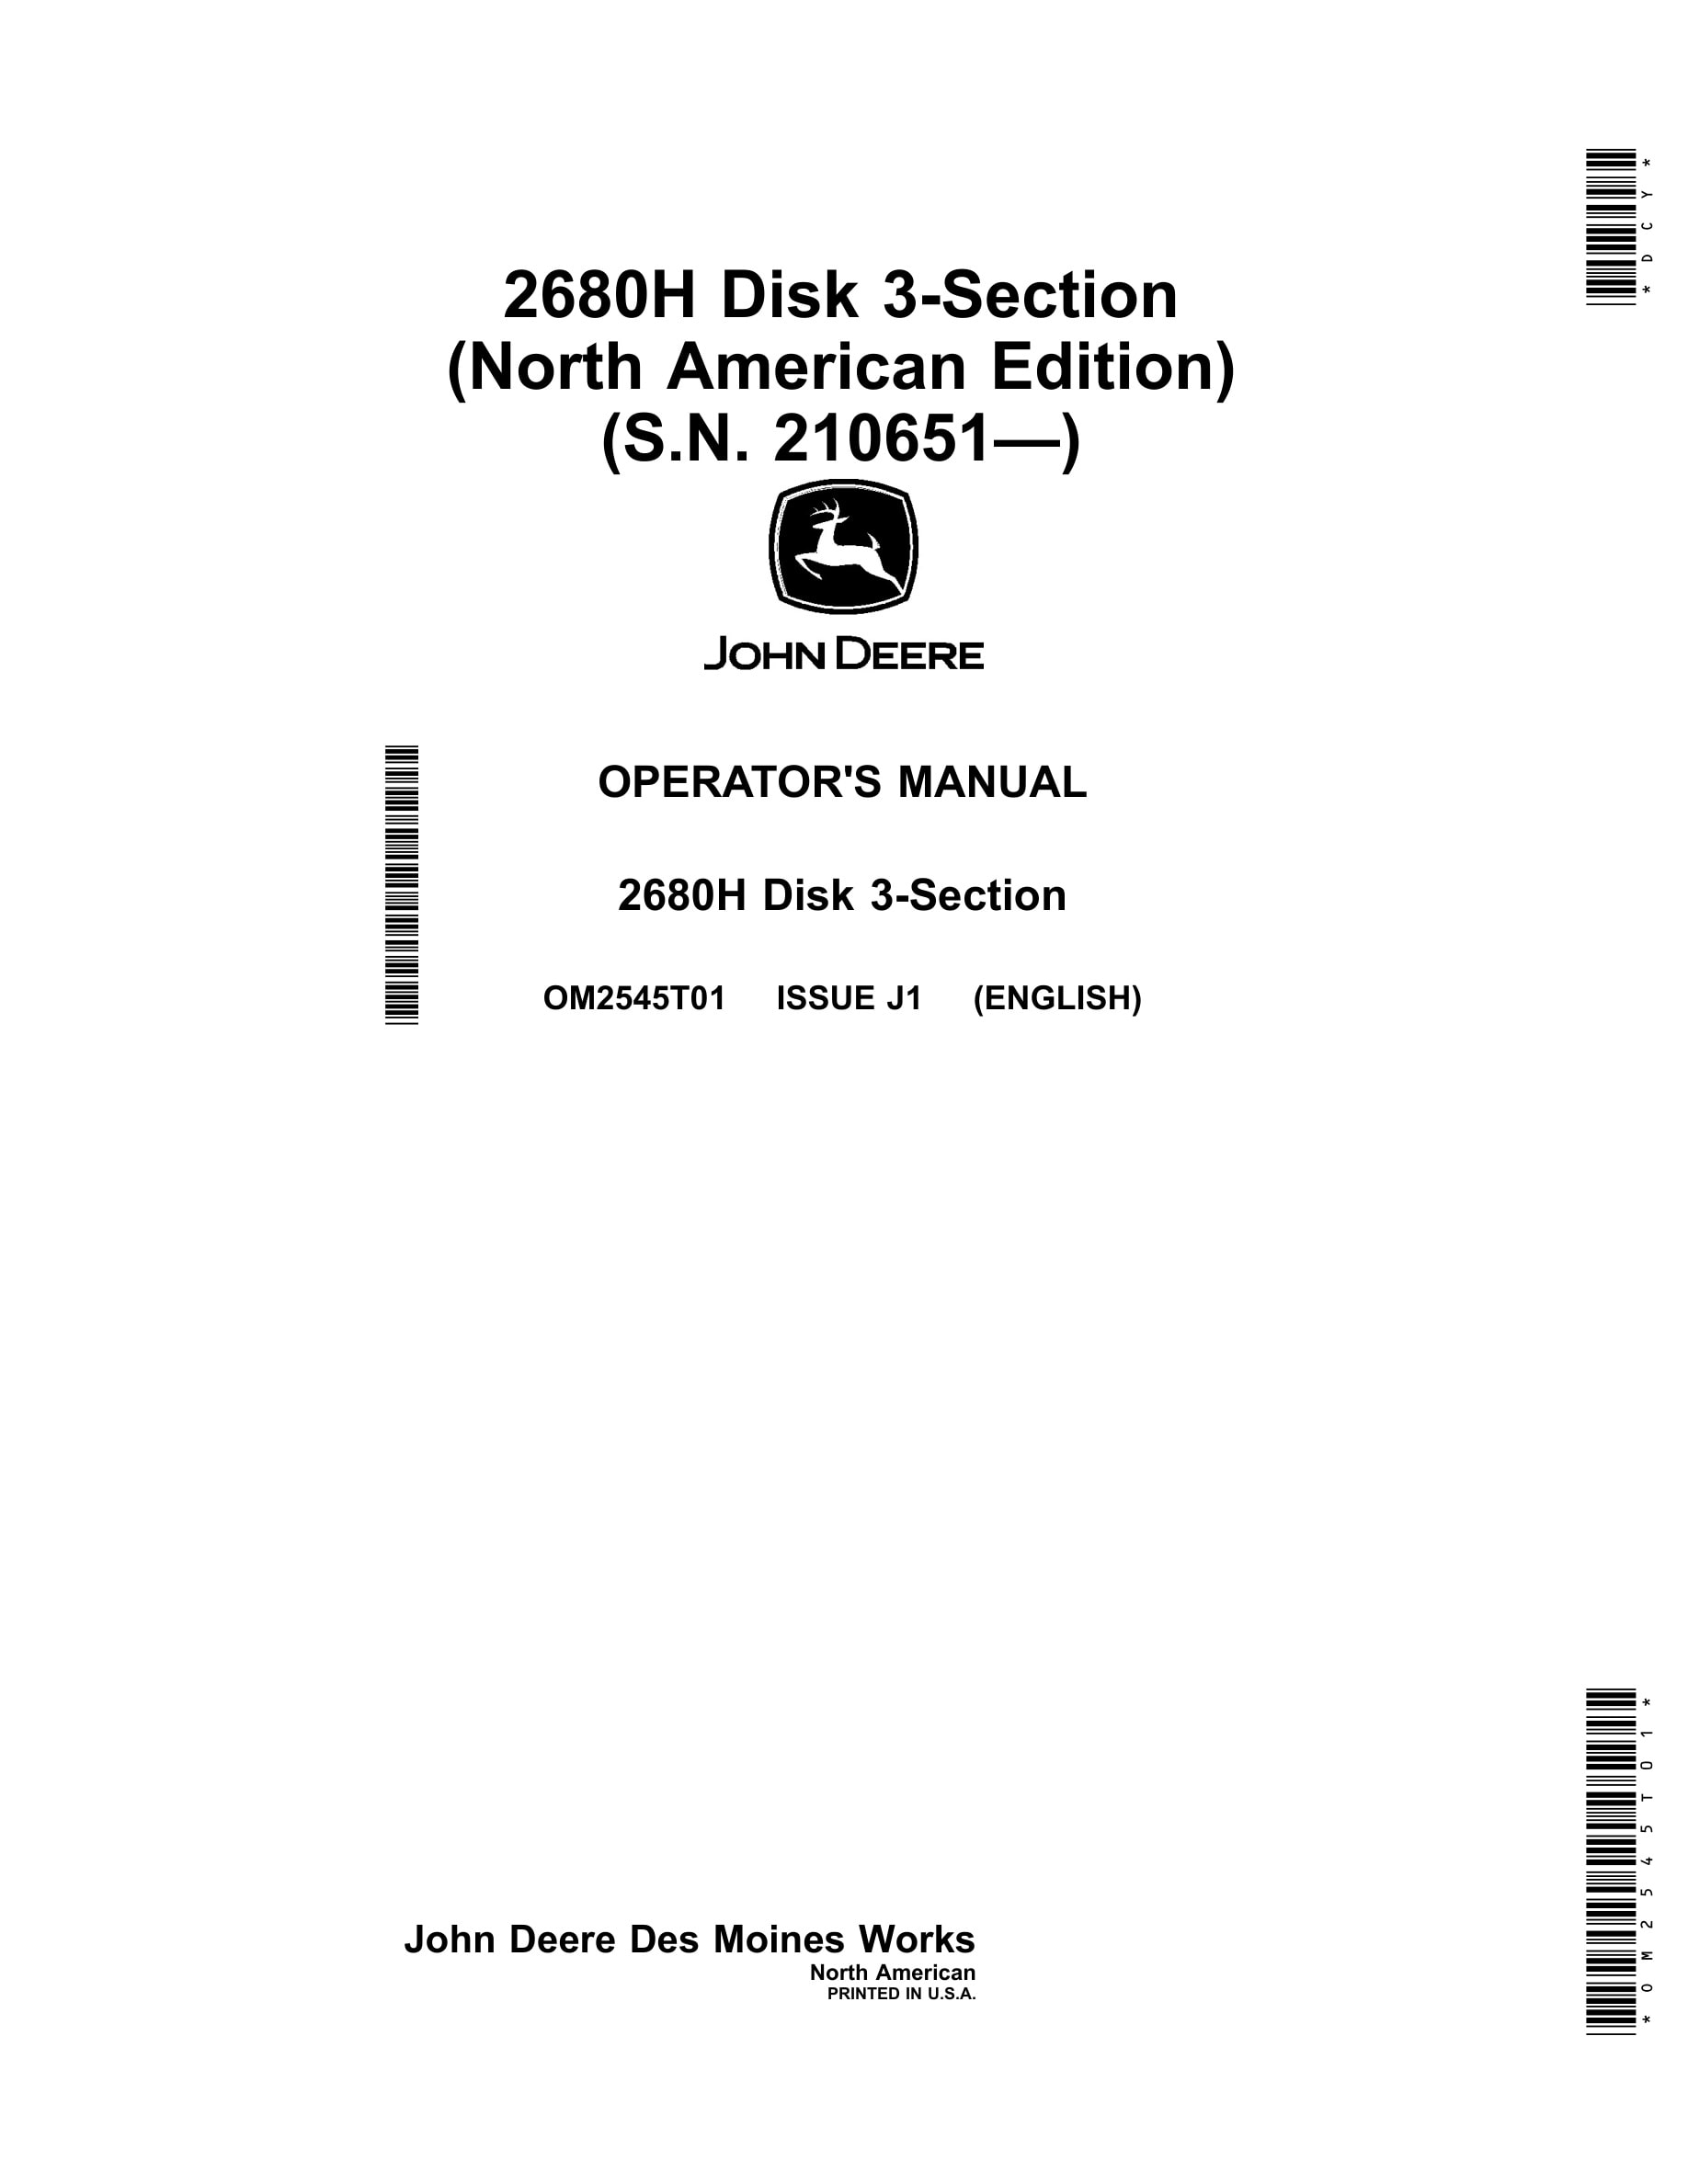 John Deere 2680H Disk 3-Section Operator Manual OM2545T01-1